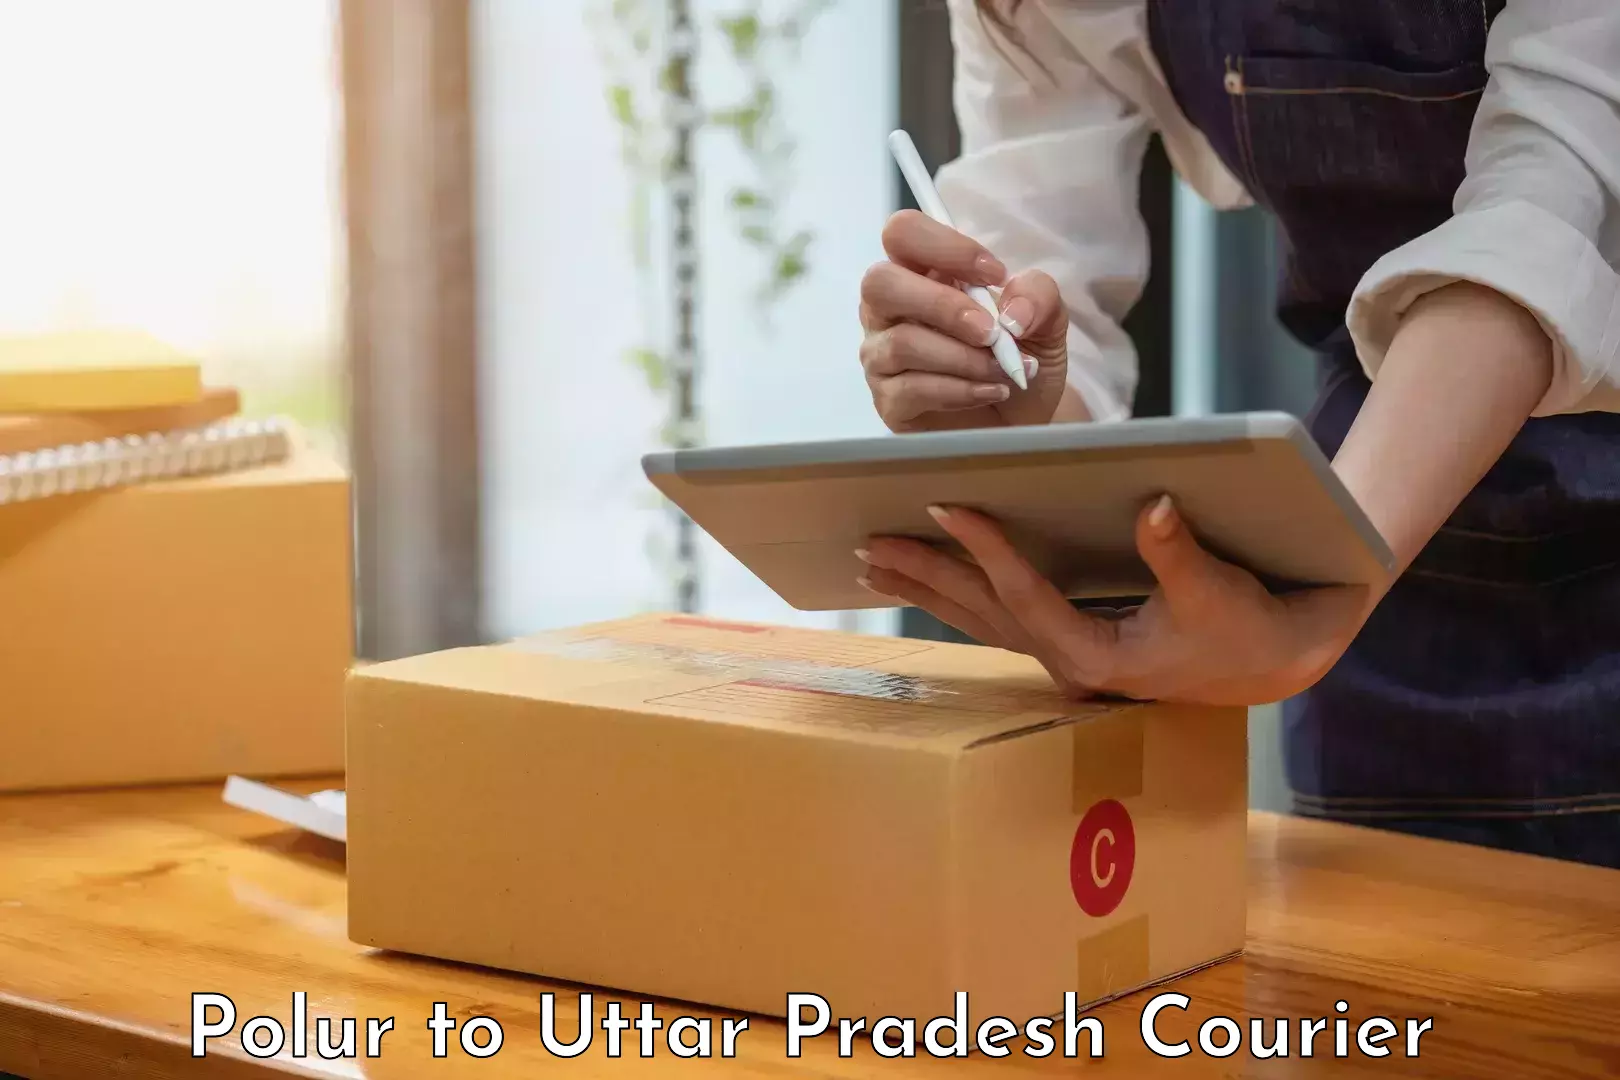 Courier service efficiency Polur to Vrindavan